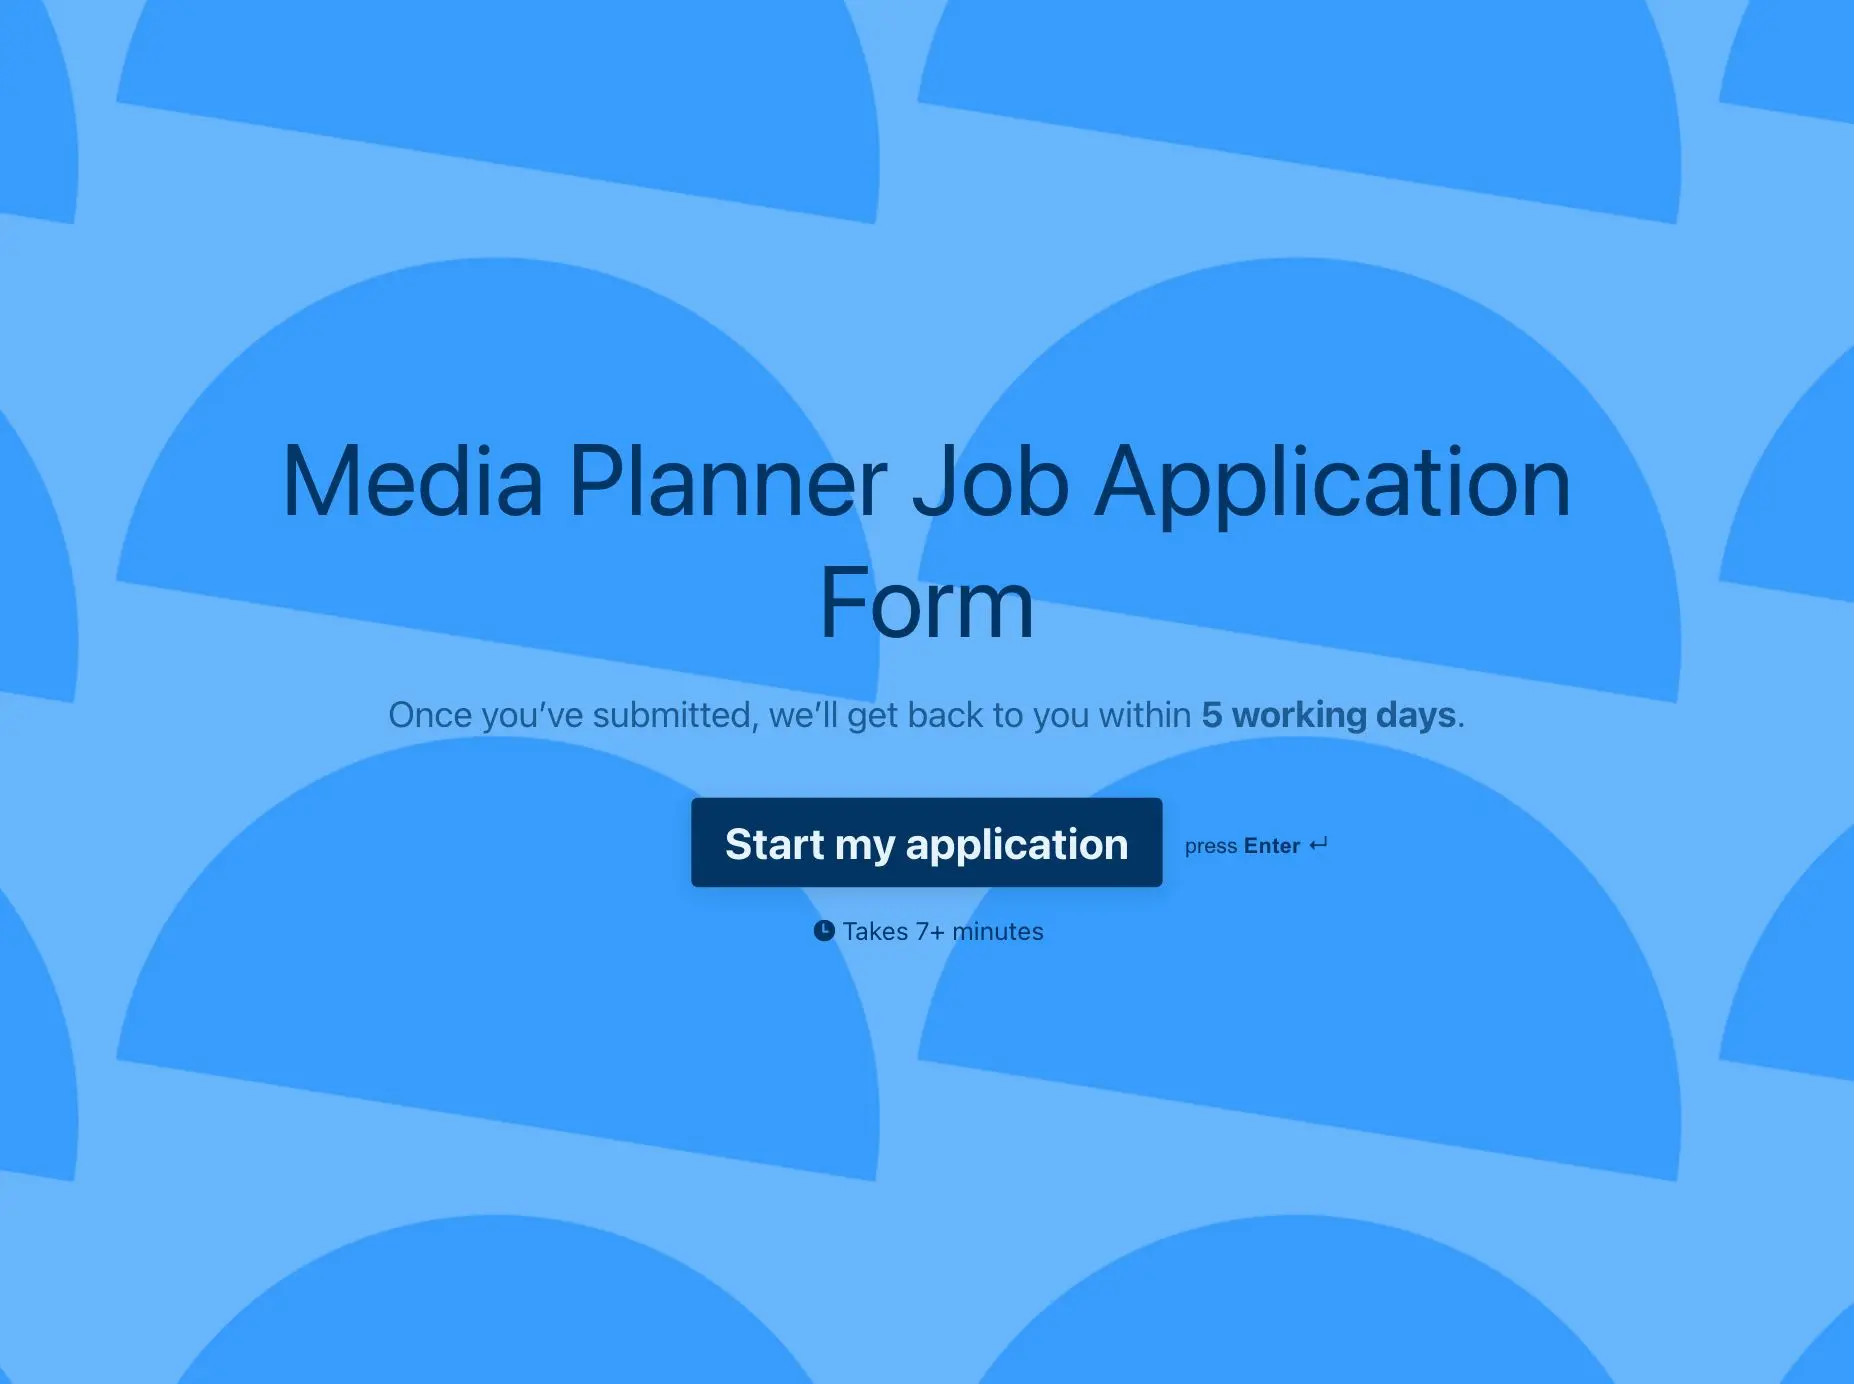 Media Planner Job Application Form Template Hero